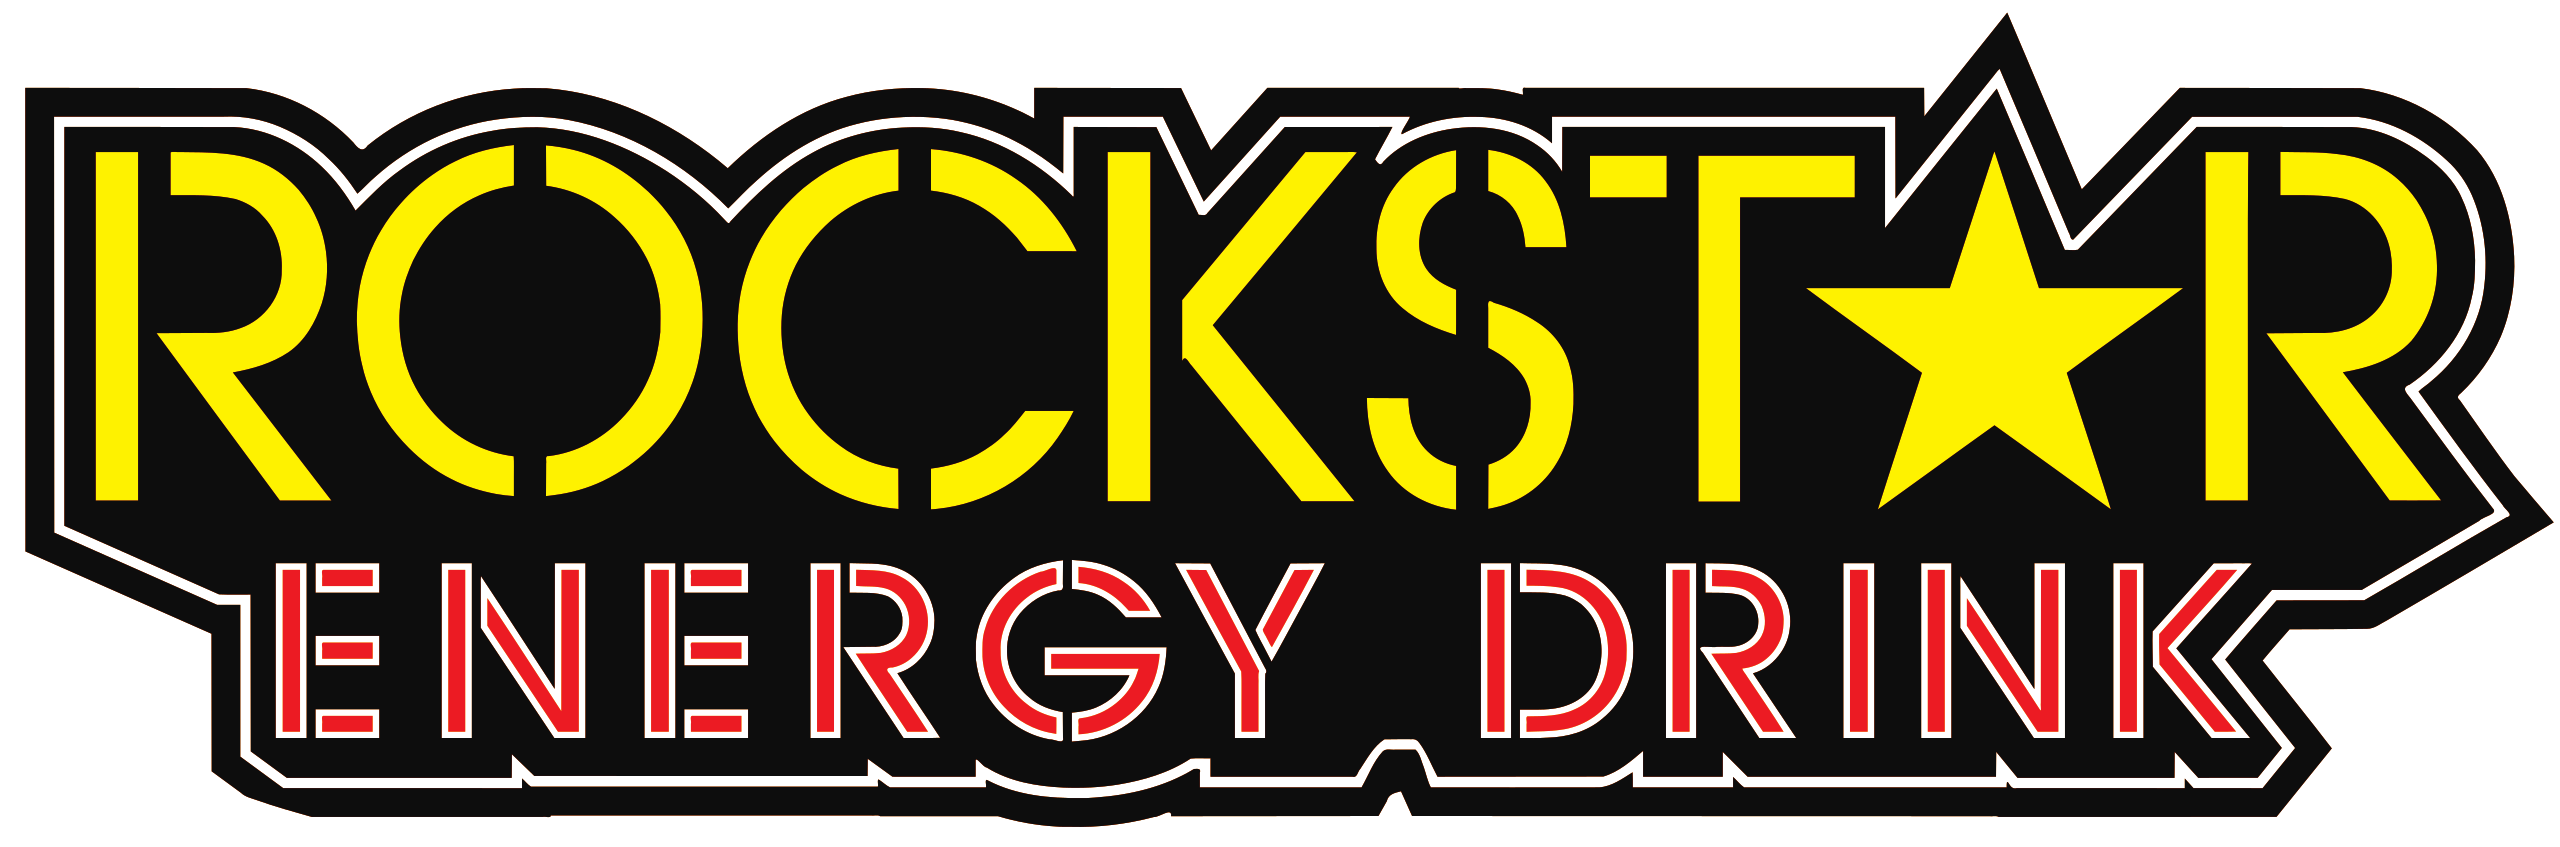 Rockstar_energy_drink